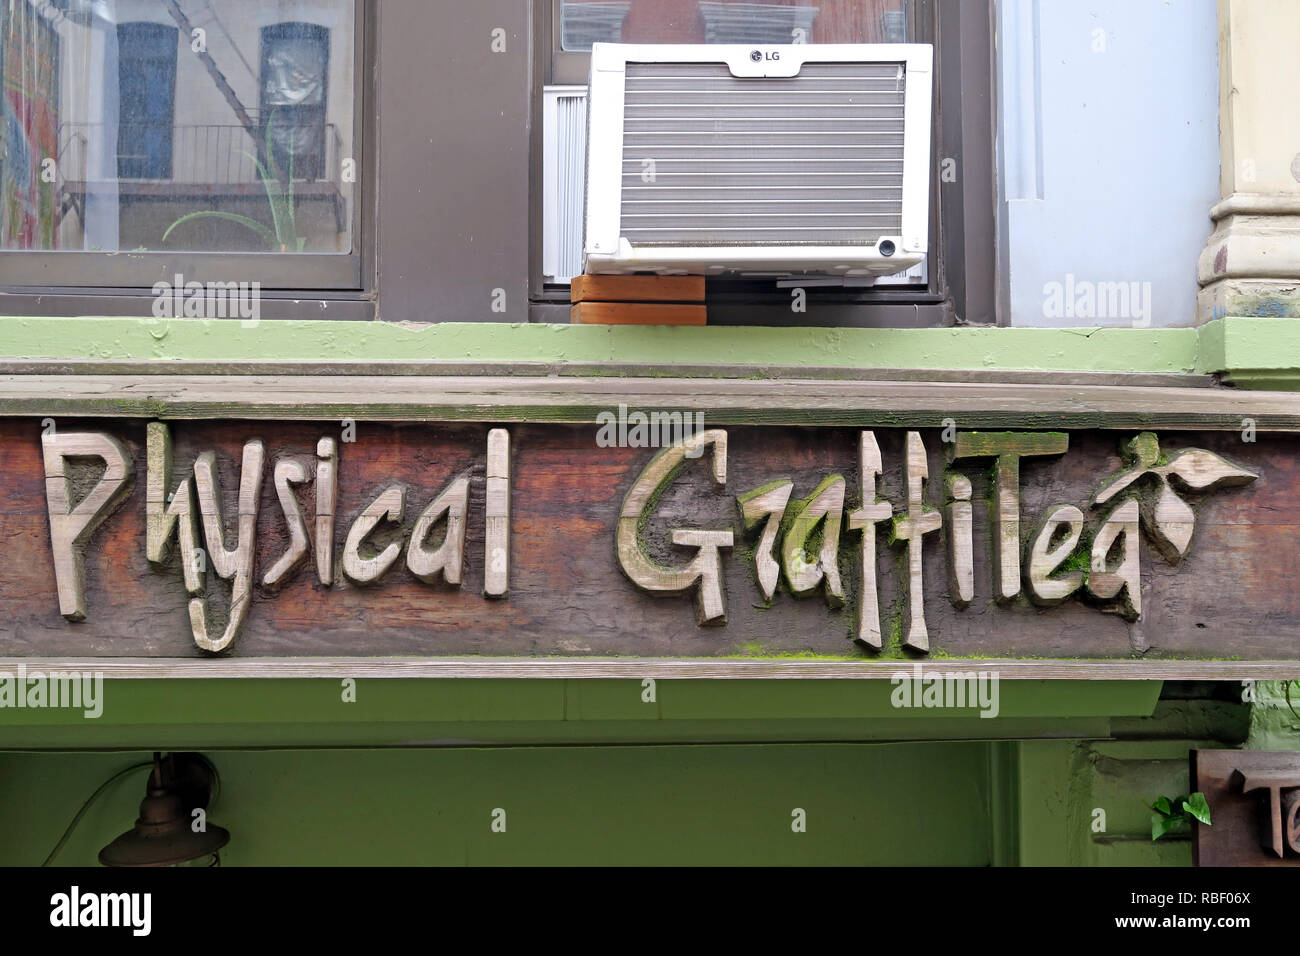 Physische Graffitea (Physical Graffiti) nach Led Zeppelin album, Cafe, 96 St Marks Pl, New York, NY 10009, USA Stockfoto